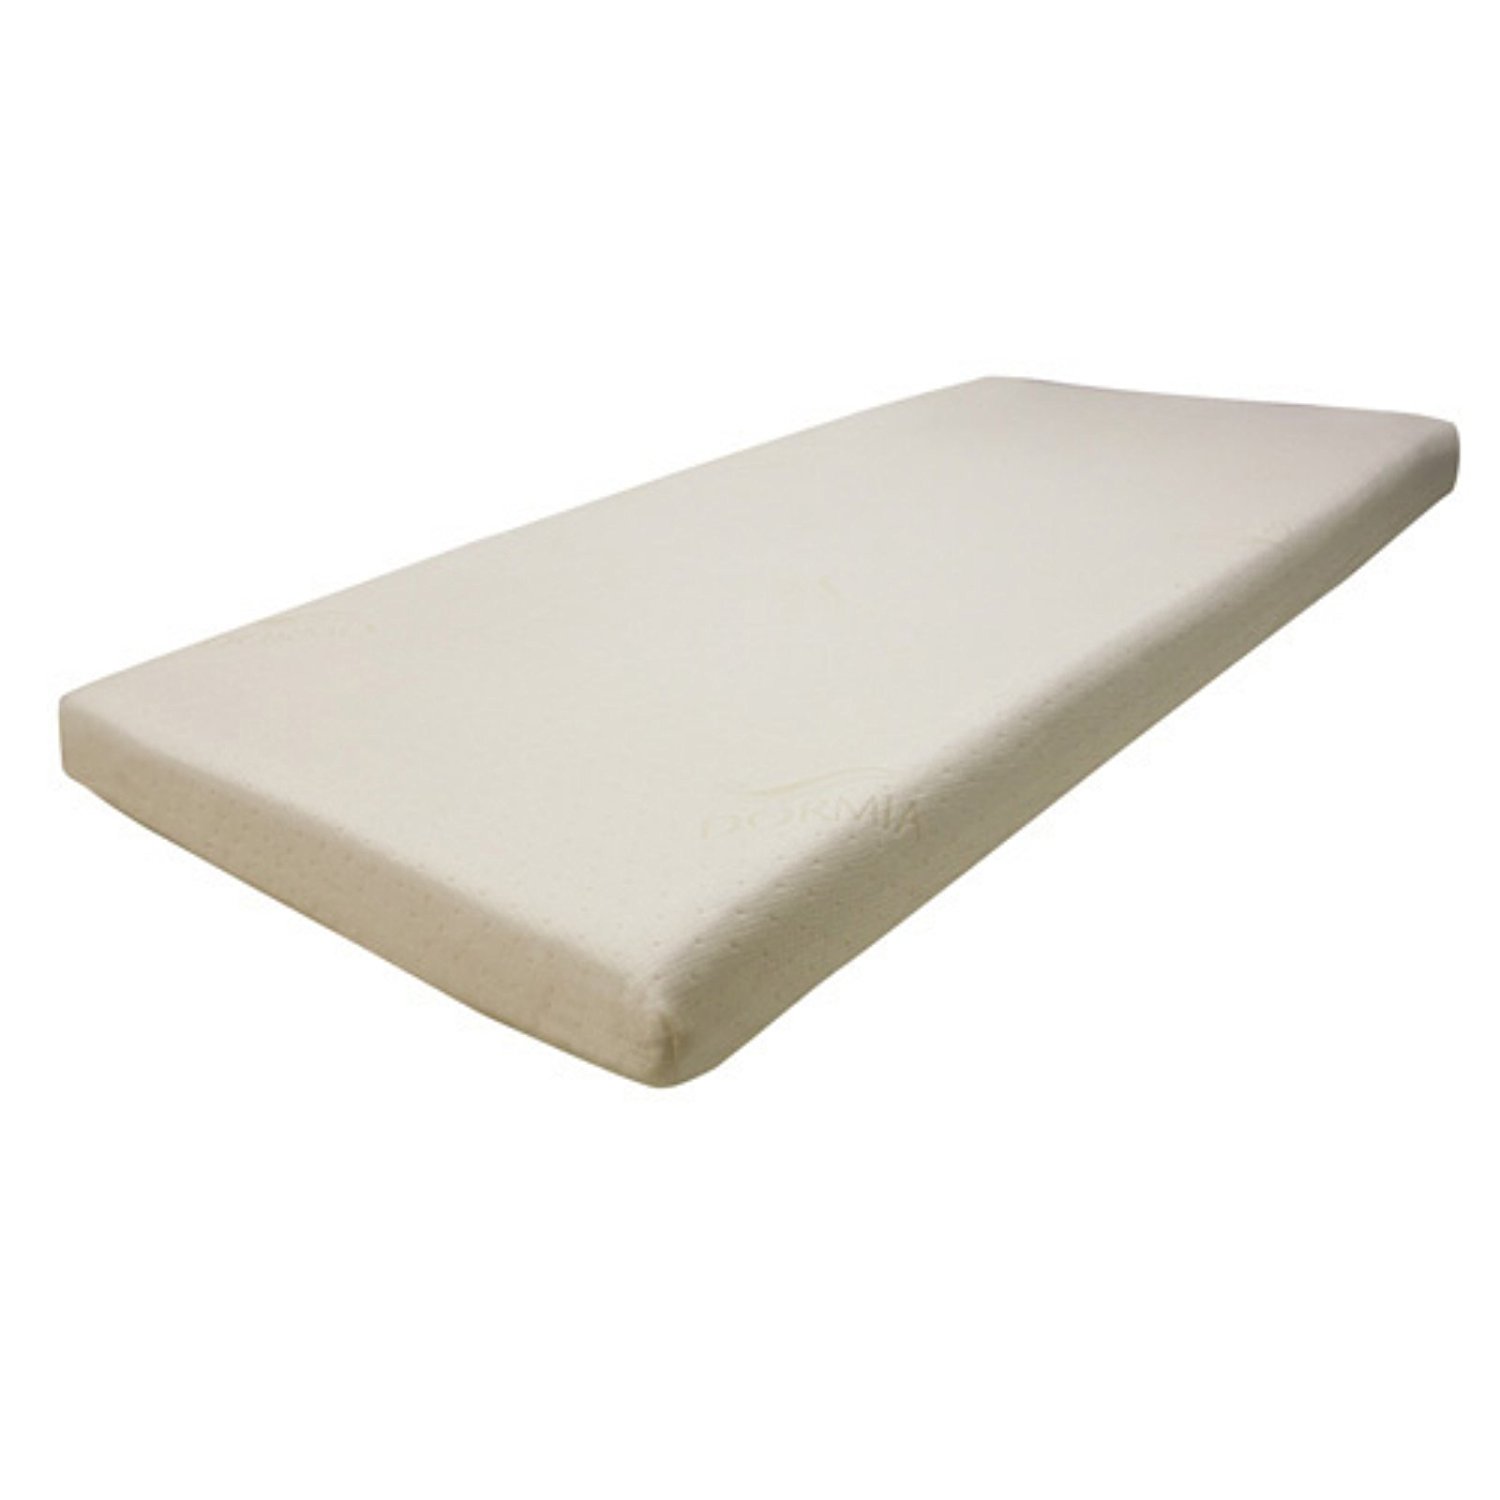 Classic Brands Memory Foam Sofa Mattress | Replacement Mattress for Sofa Bed Sleeper, Twin Size